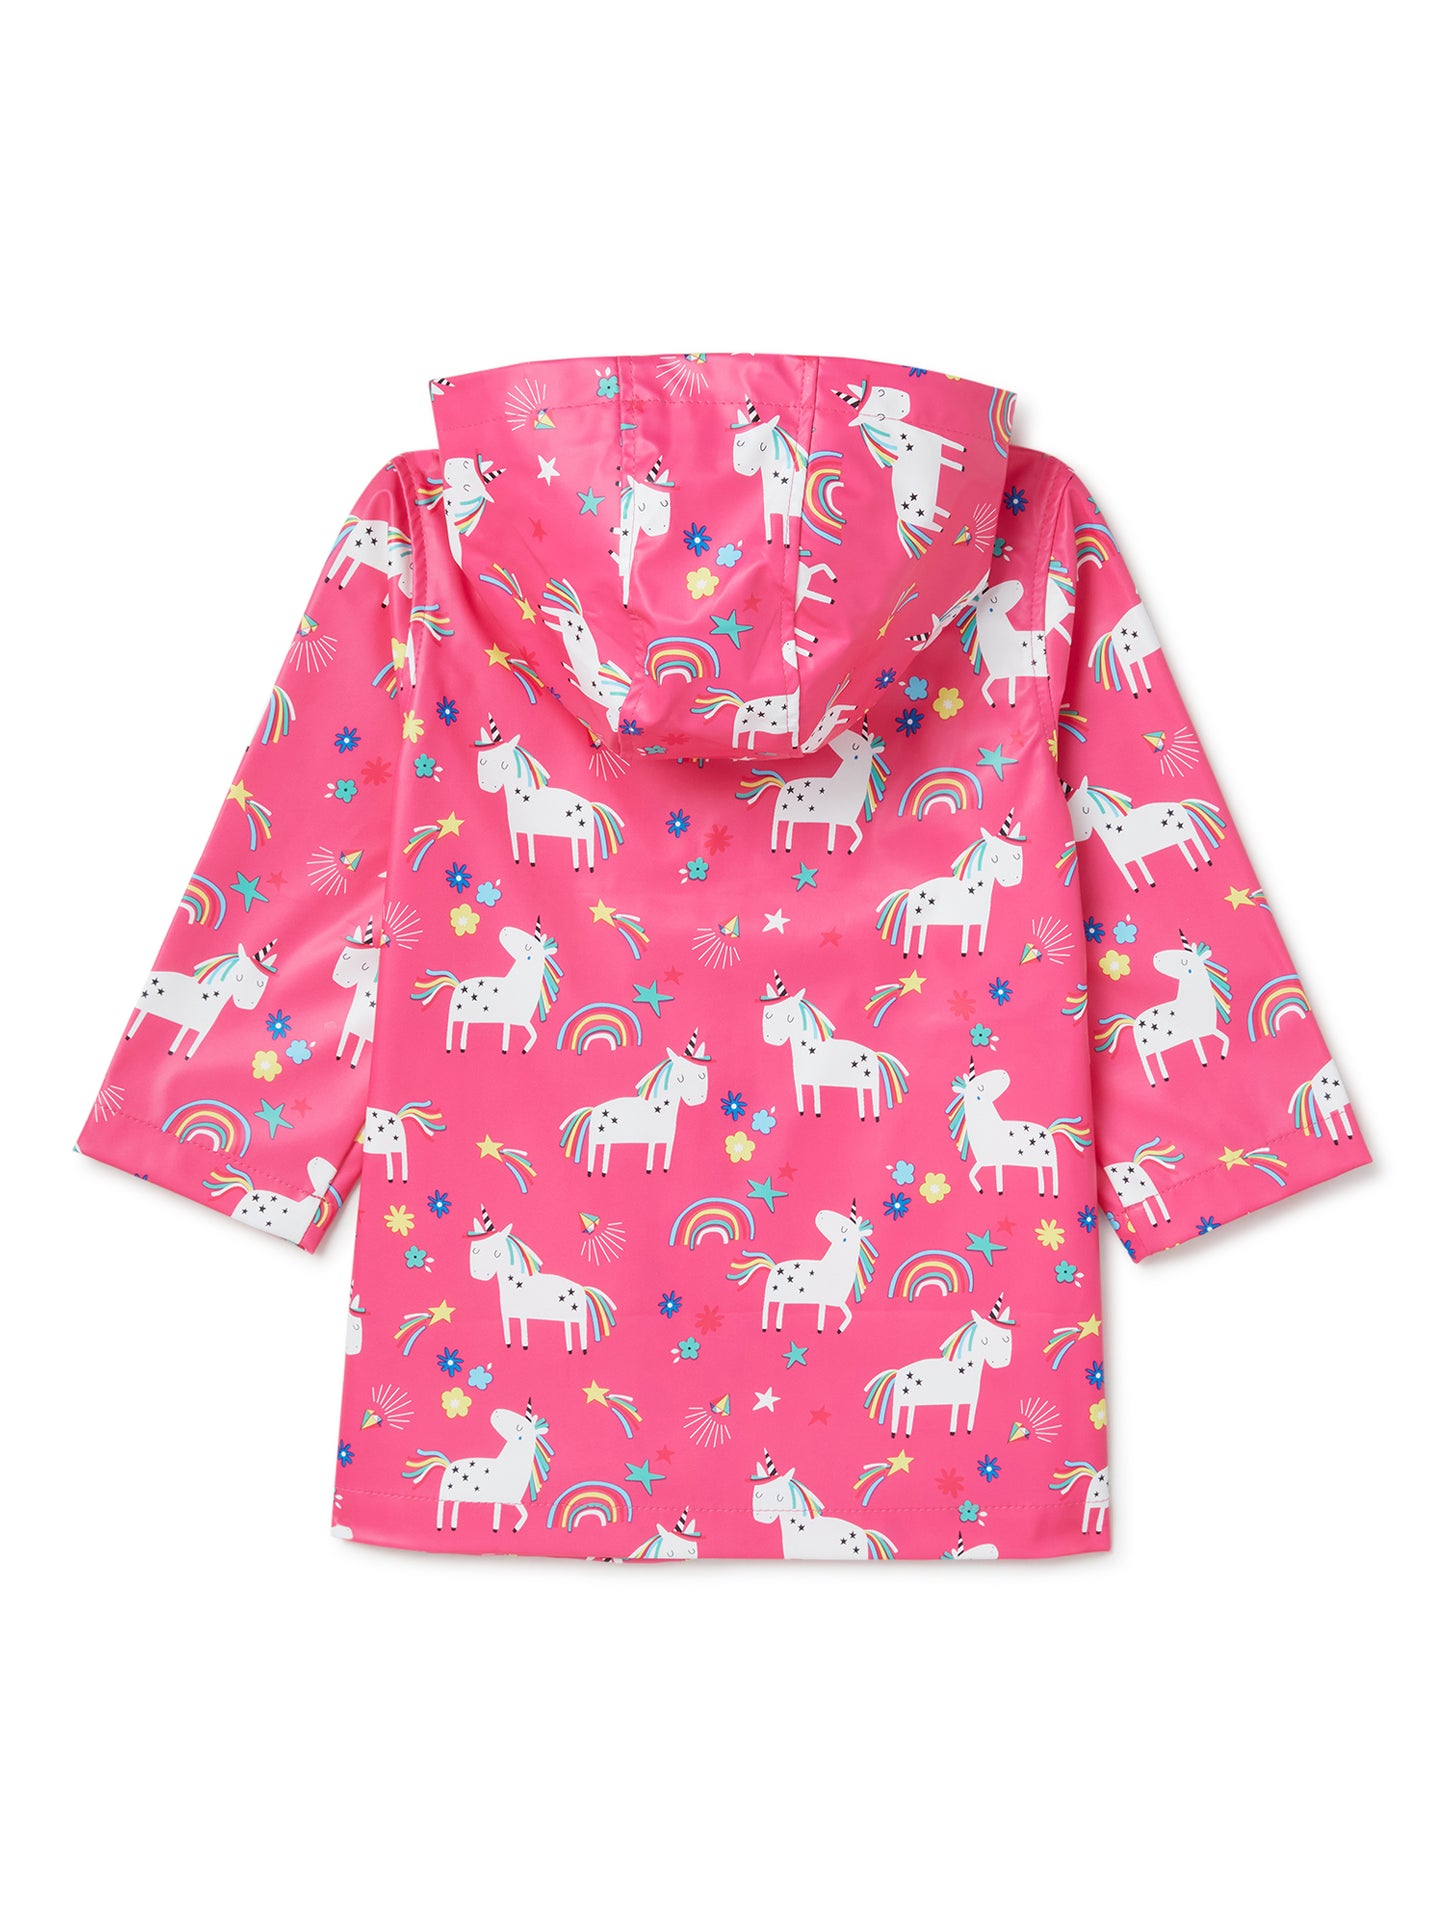 Pink Platinum Toddler Girls Unicorn Print Rain Jacket with Hood - 2 T - Pink